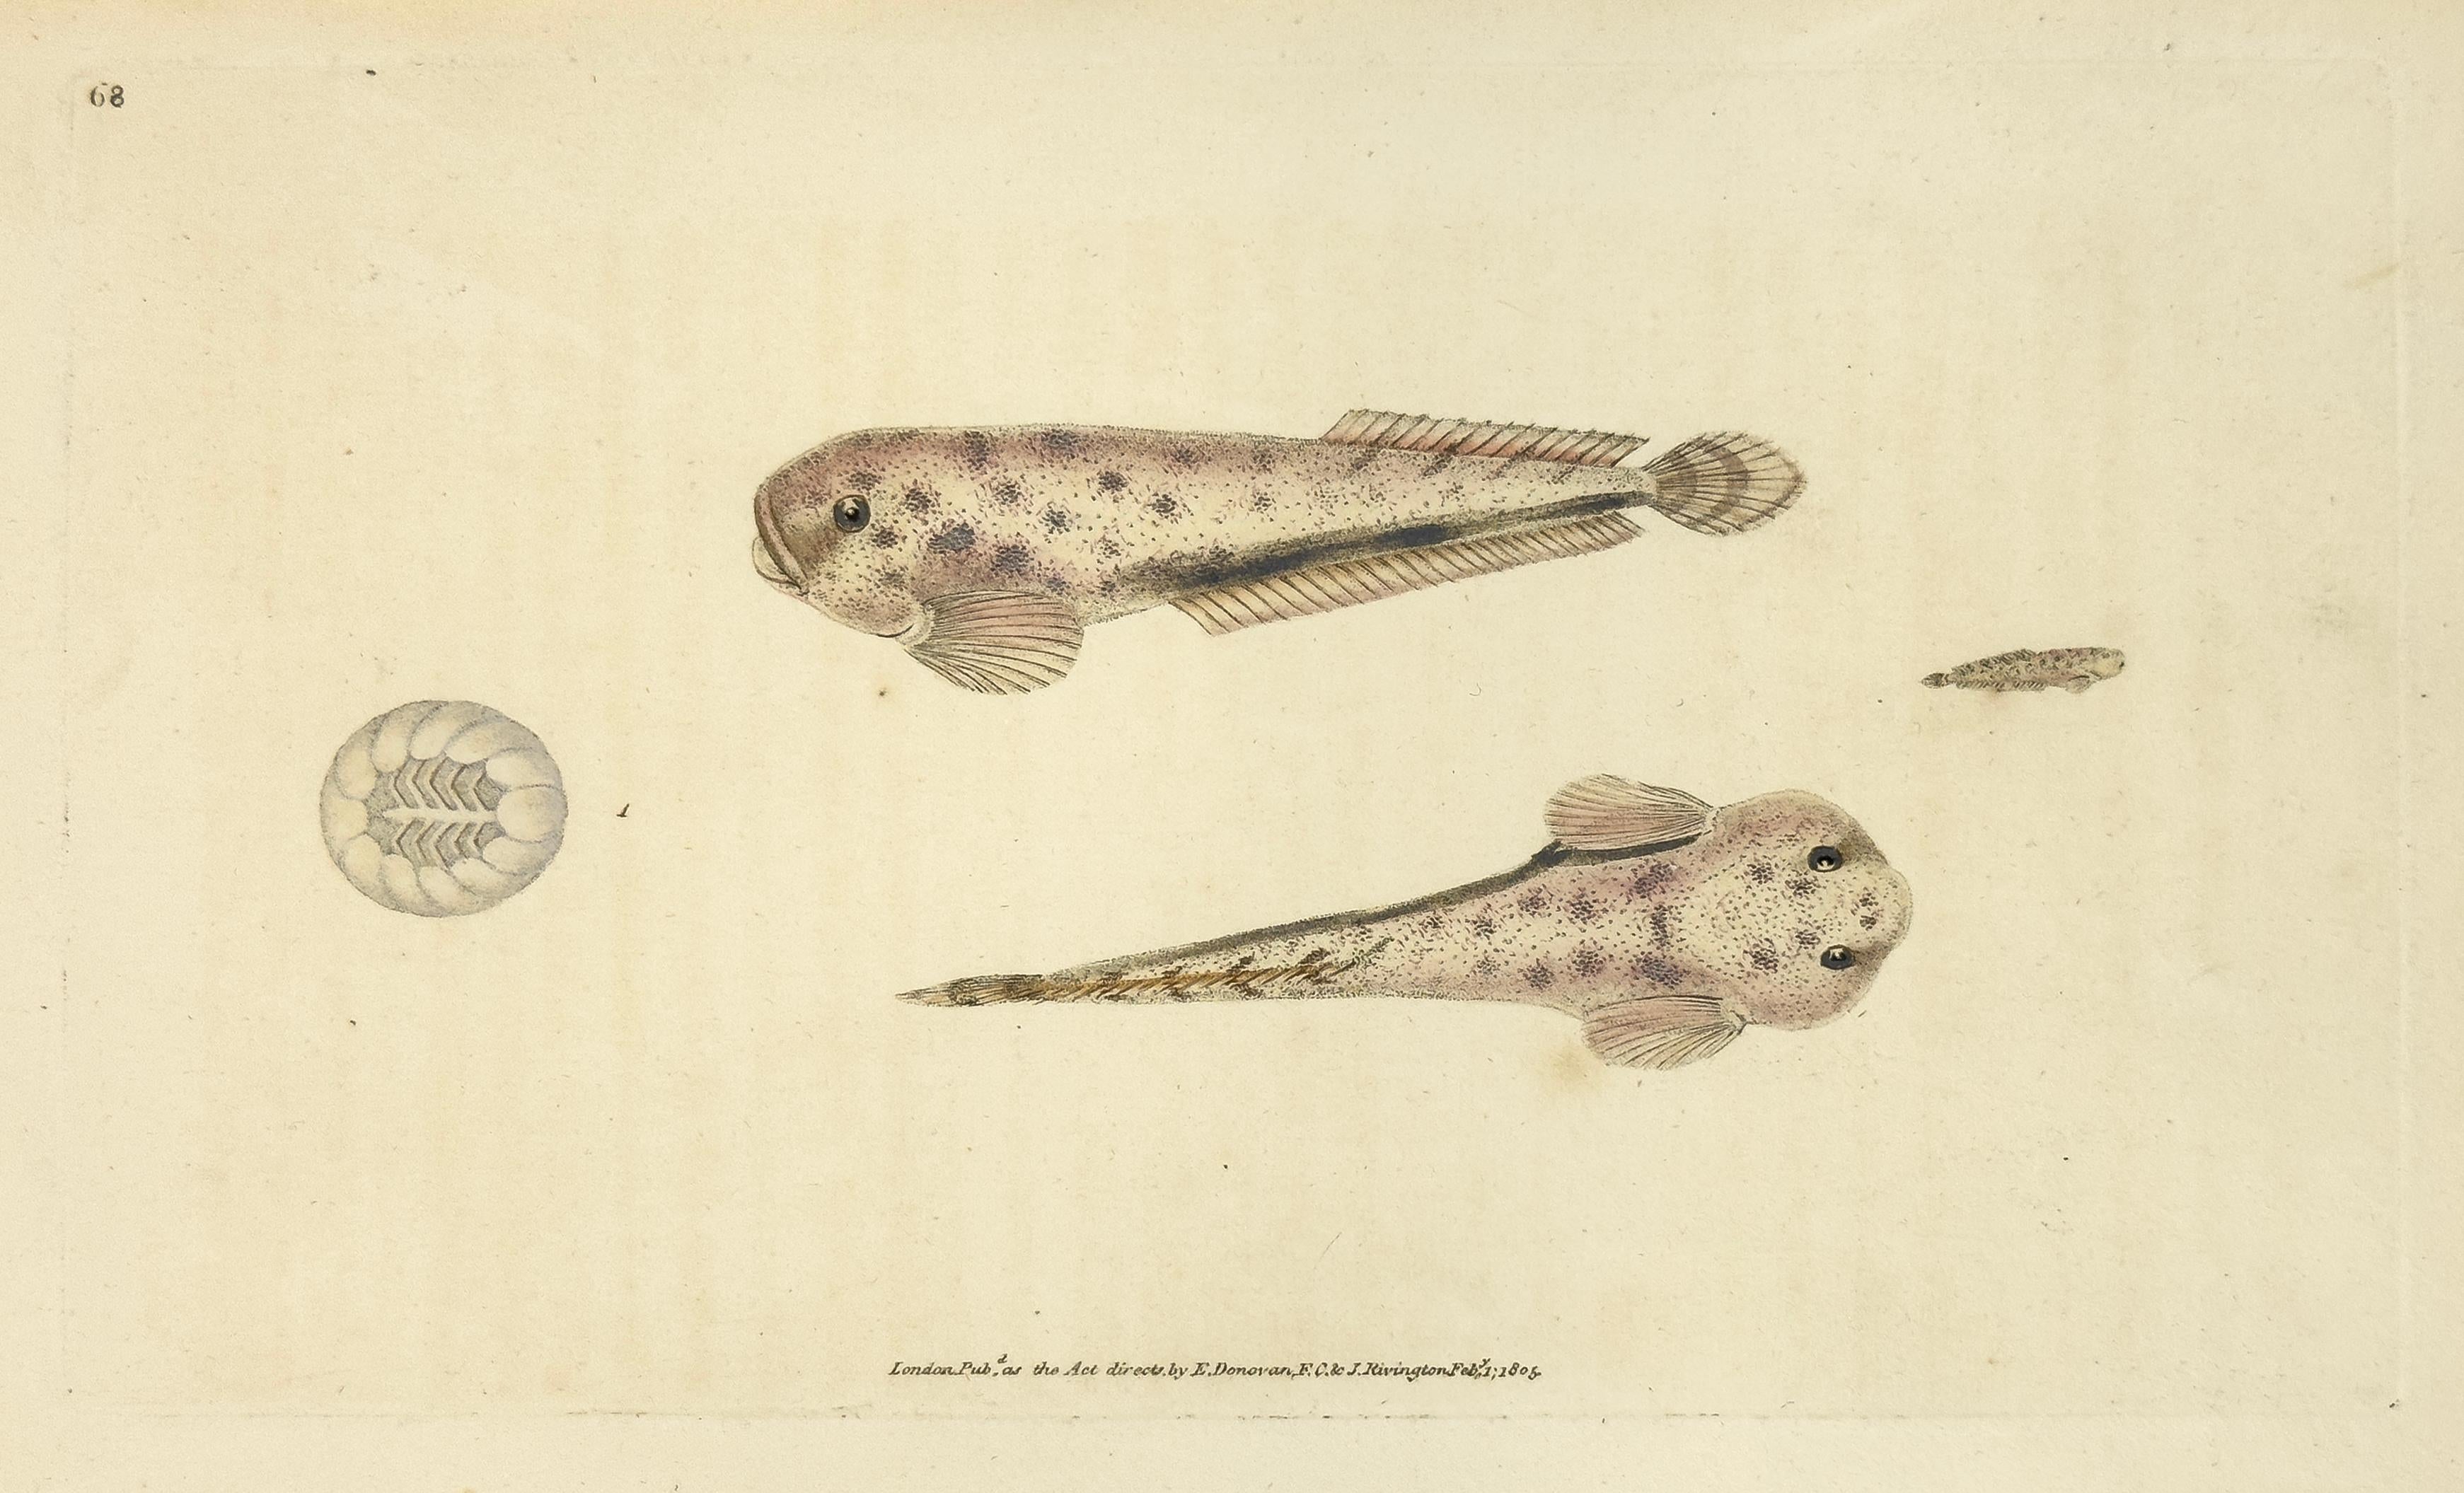 Animal Print Edward Donovan - 68 : Cyclopterus montagui, Lump-Sucker diminutif